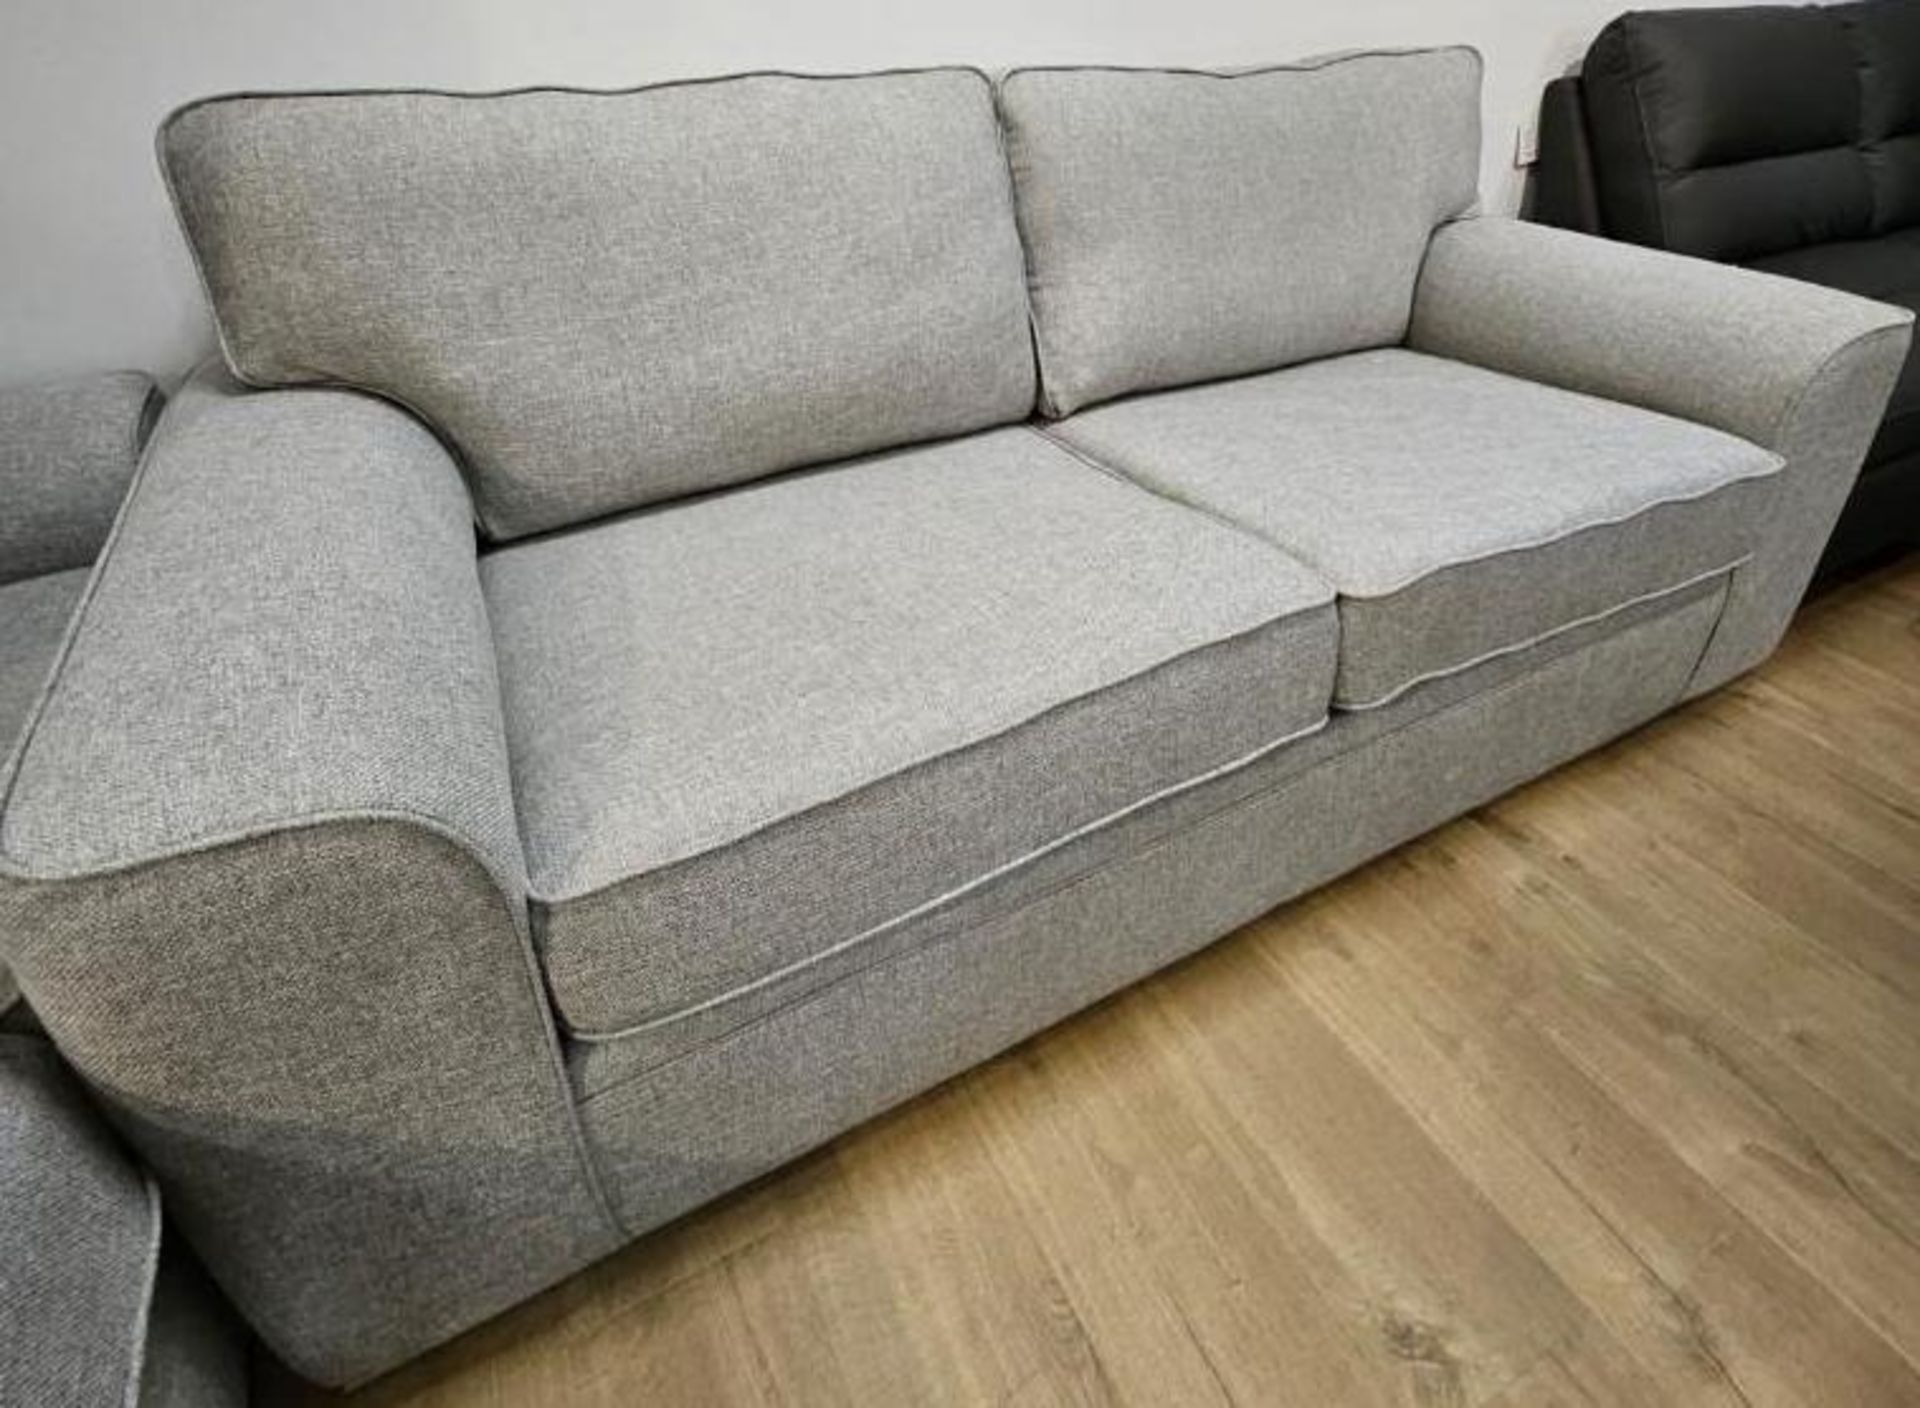 *BRAND NEW* Metro 3 + 2 seater sofa in grey. - Image 2 of 5